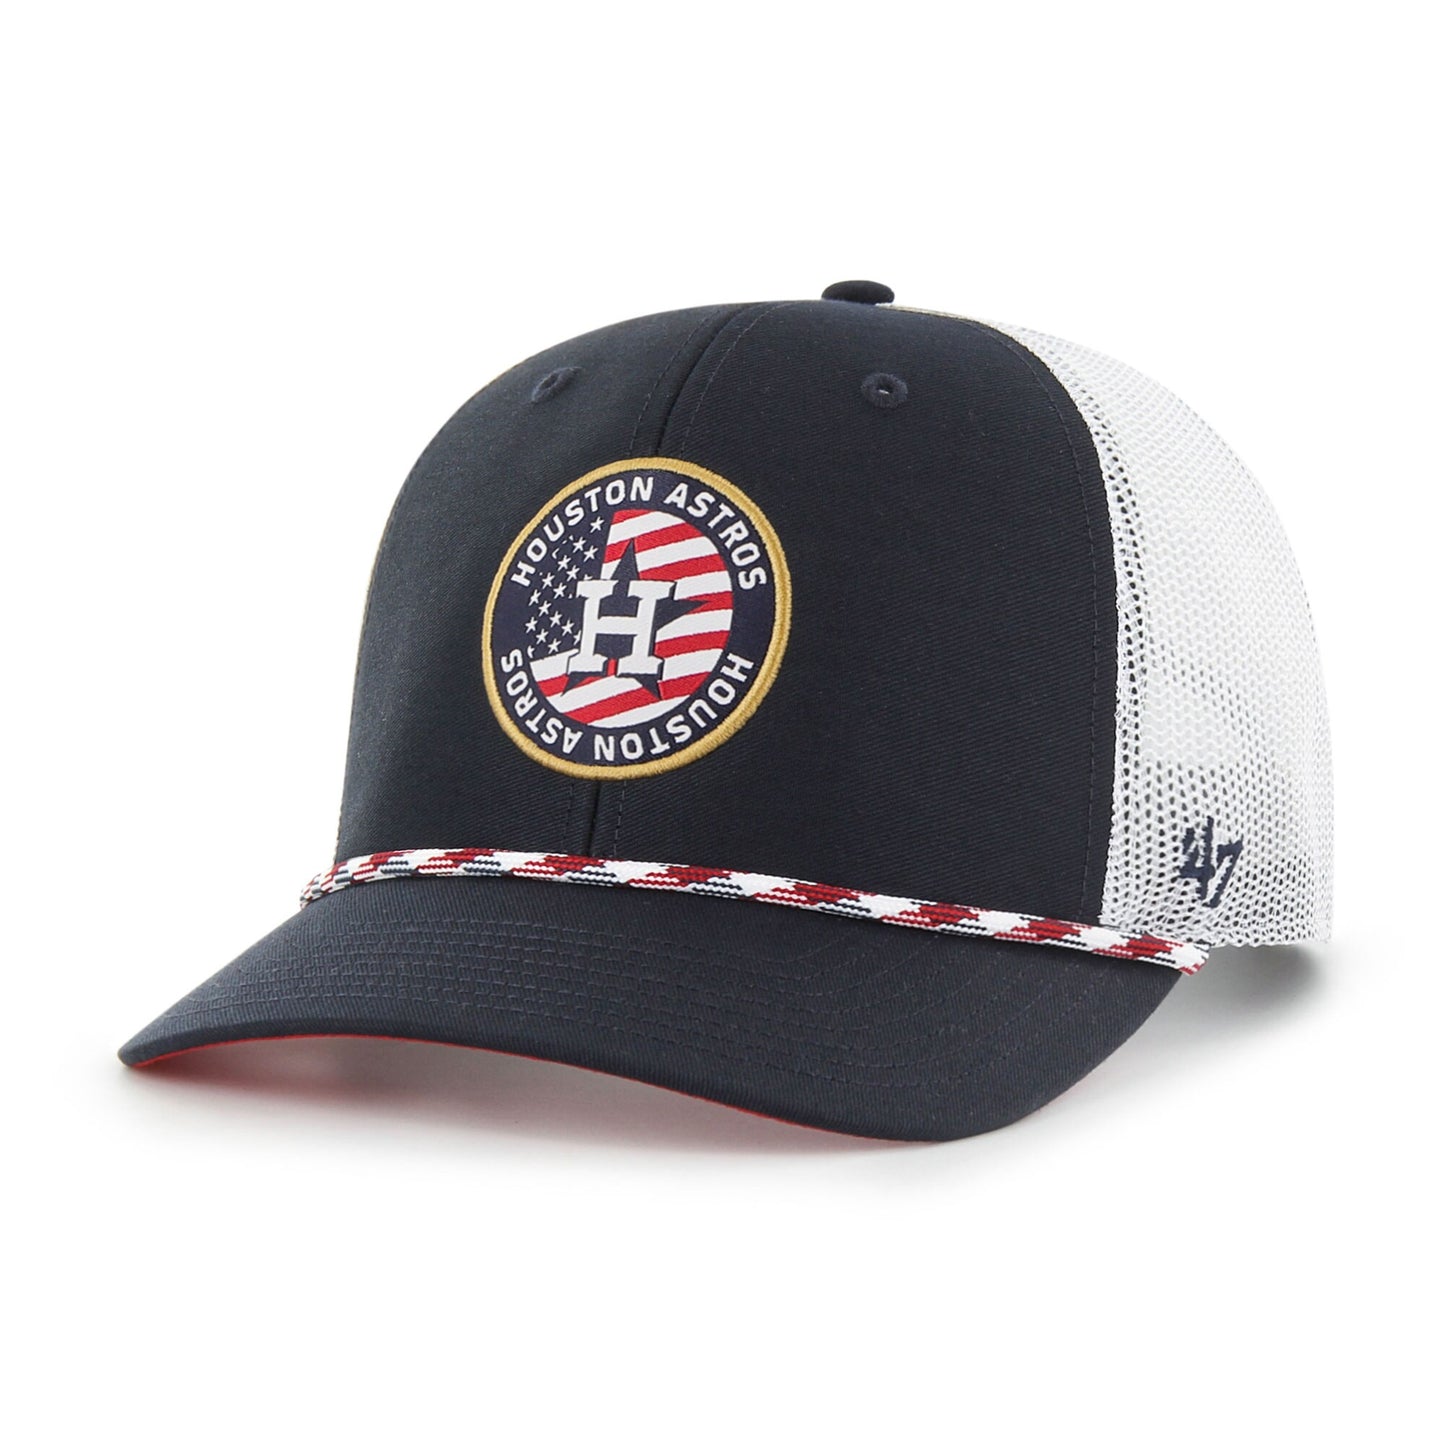 Houston Astros '47 Union Patch Trucker Adjustable Hat - Navy